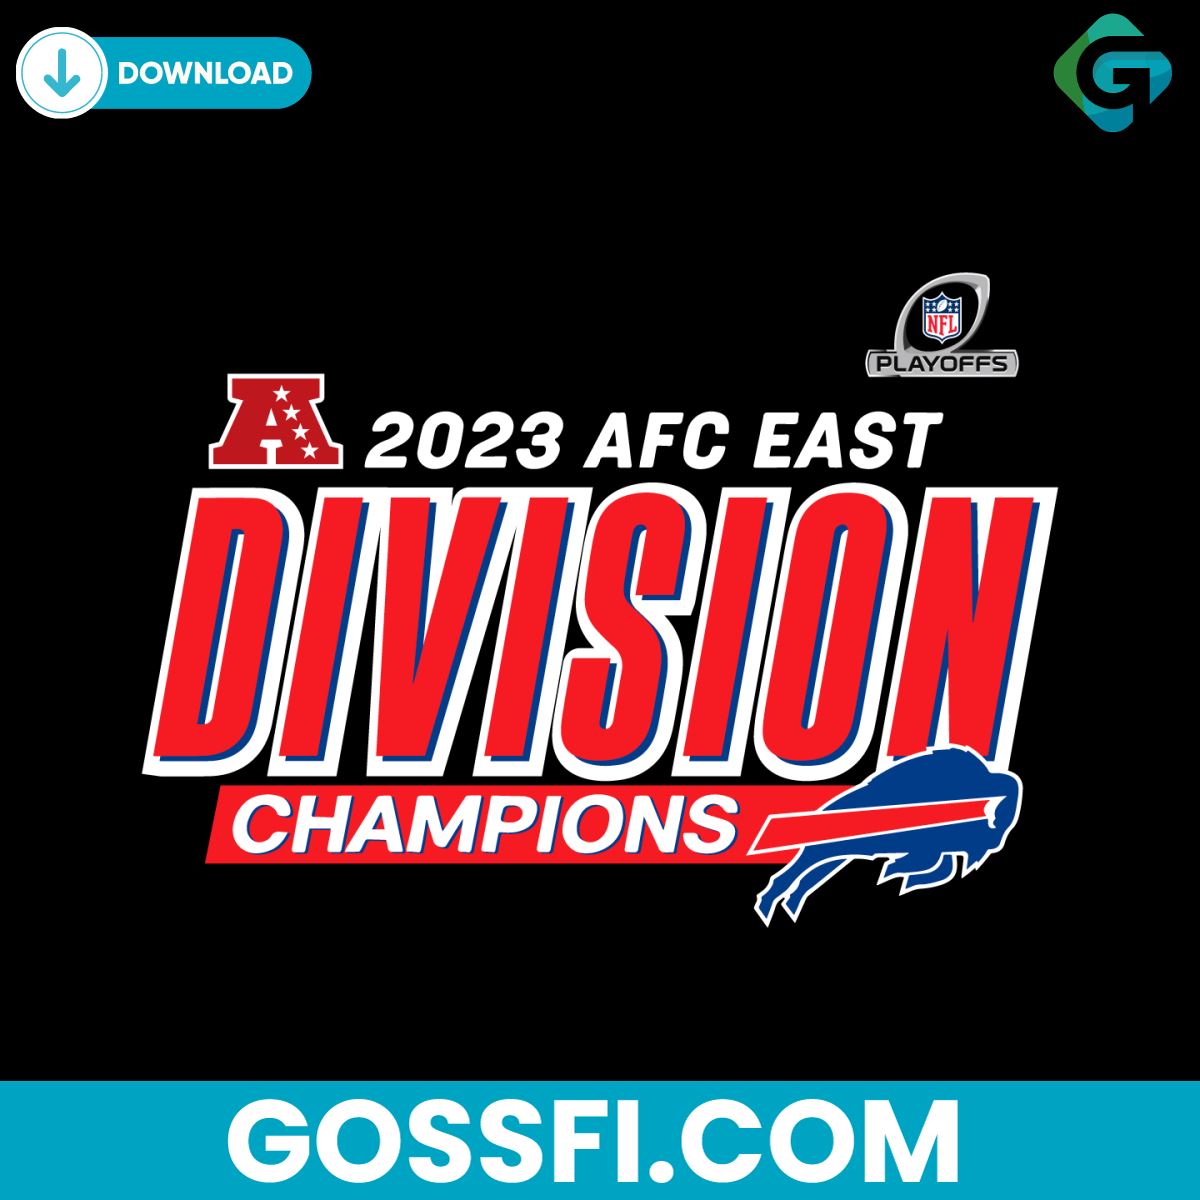 Buffalo Bills Division Champions Football Svg Digital Download